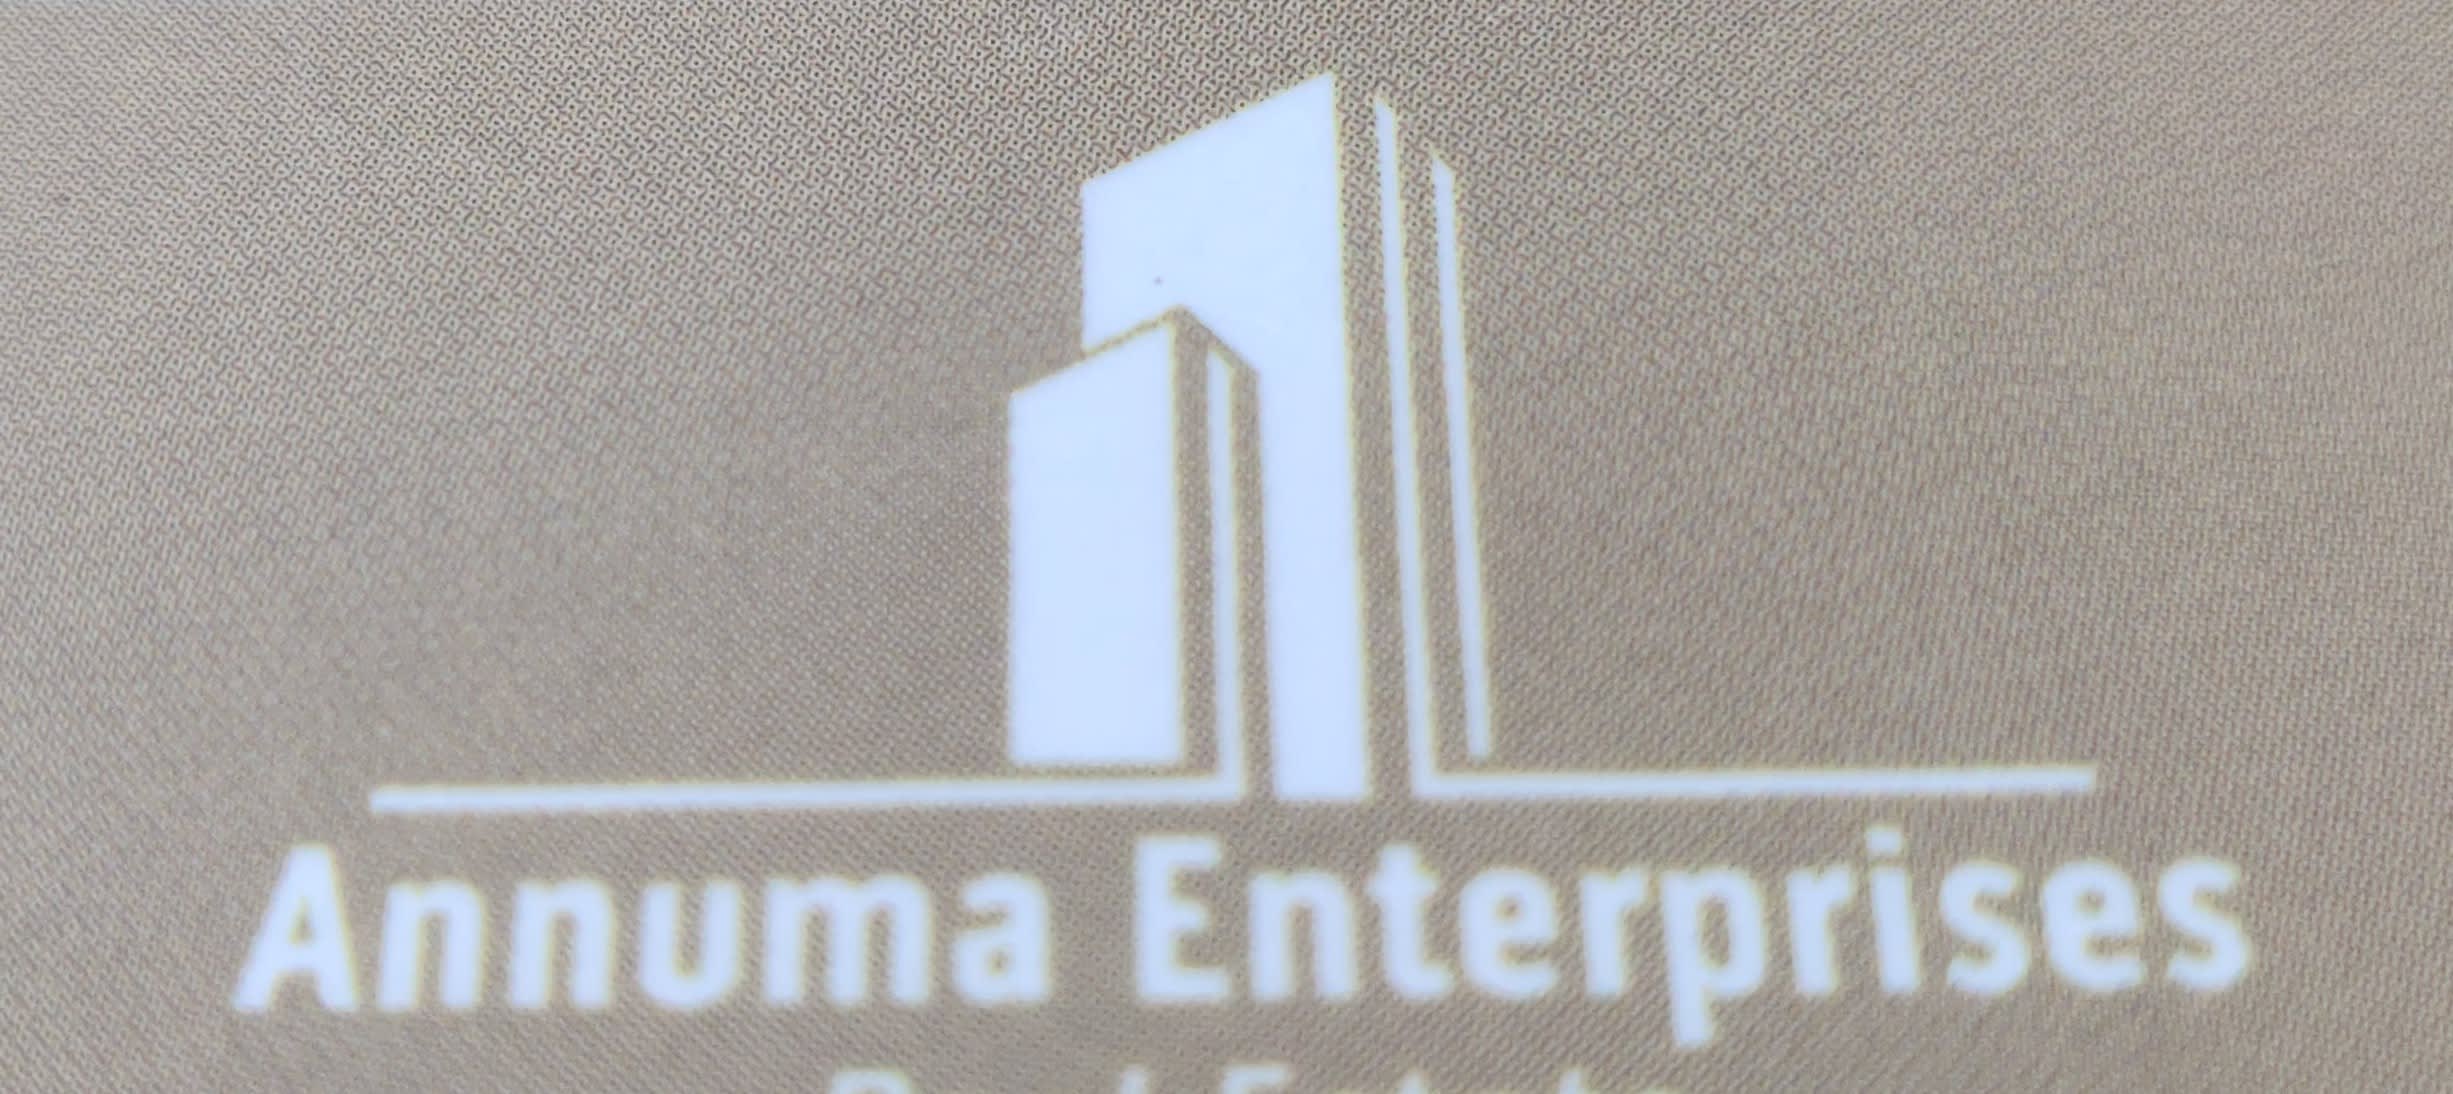 Annuma Enterprises